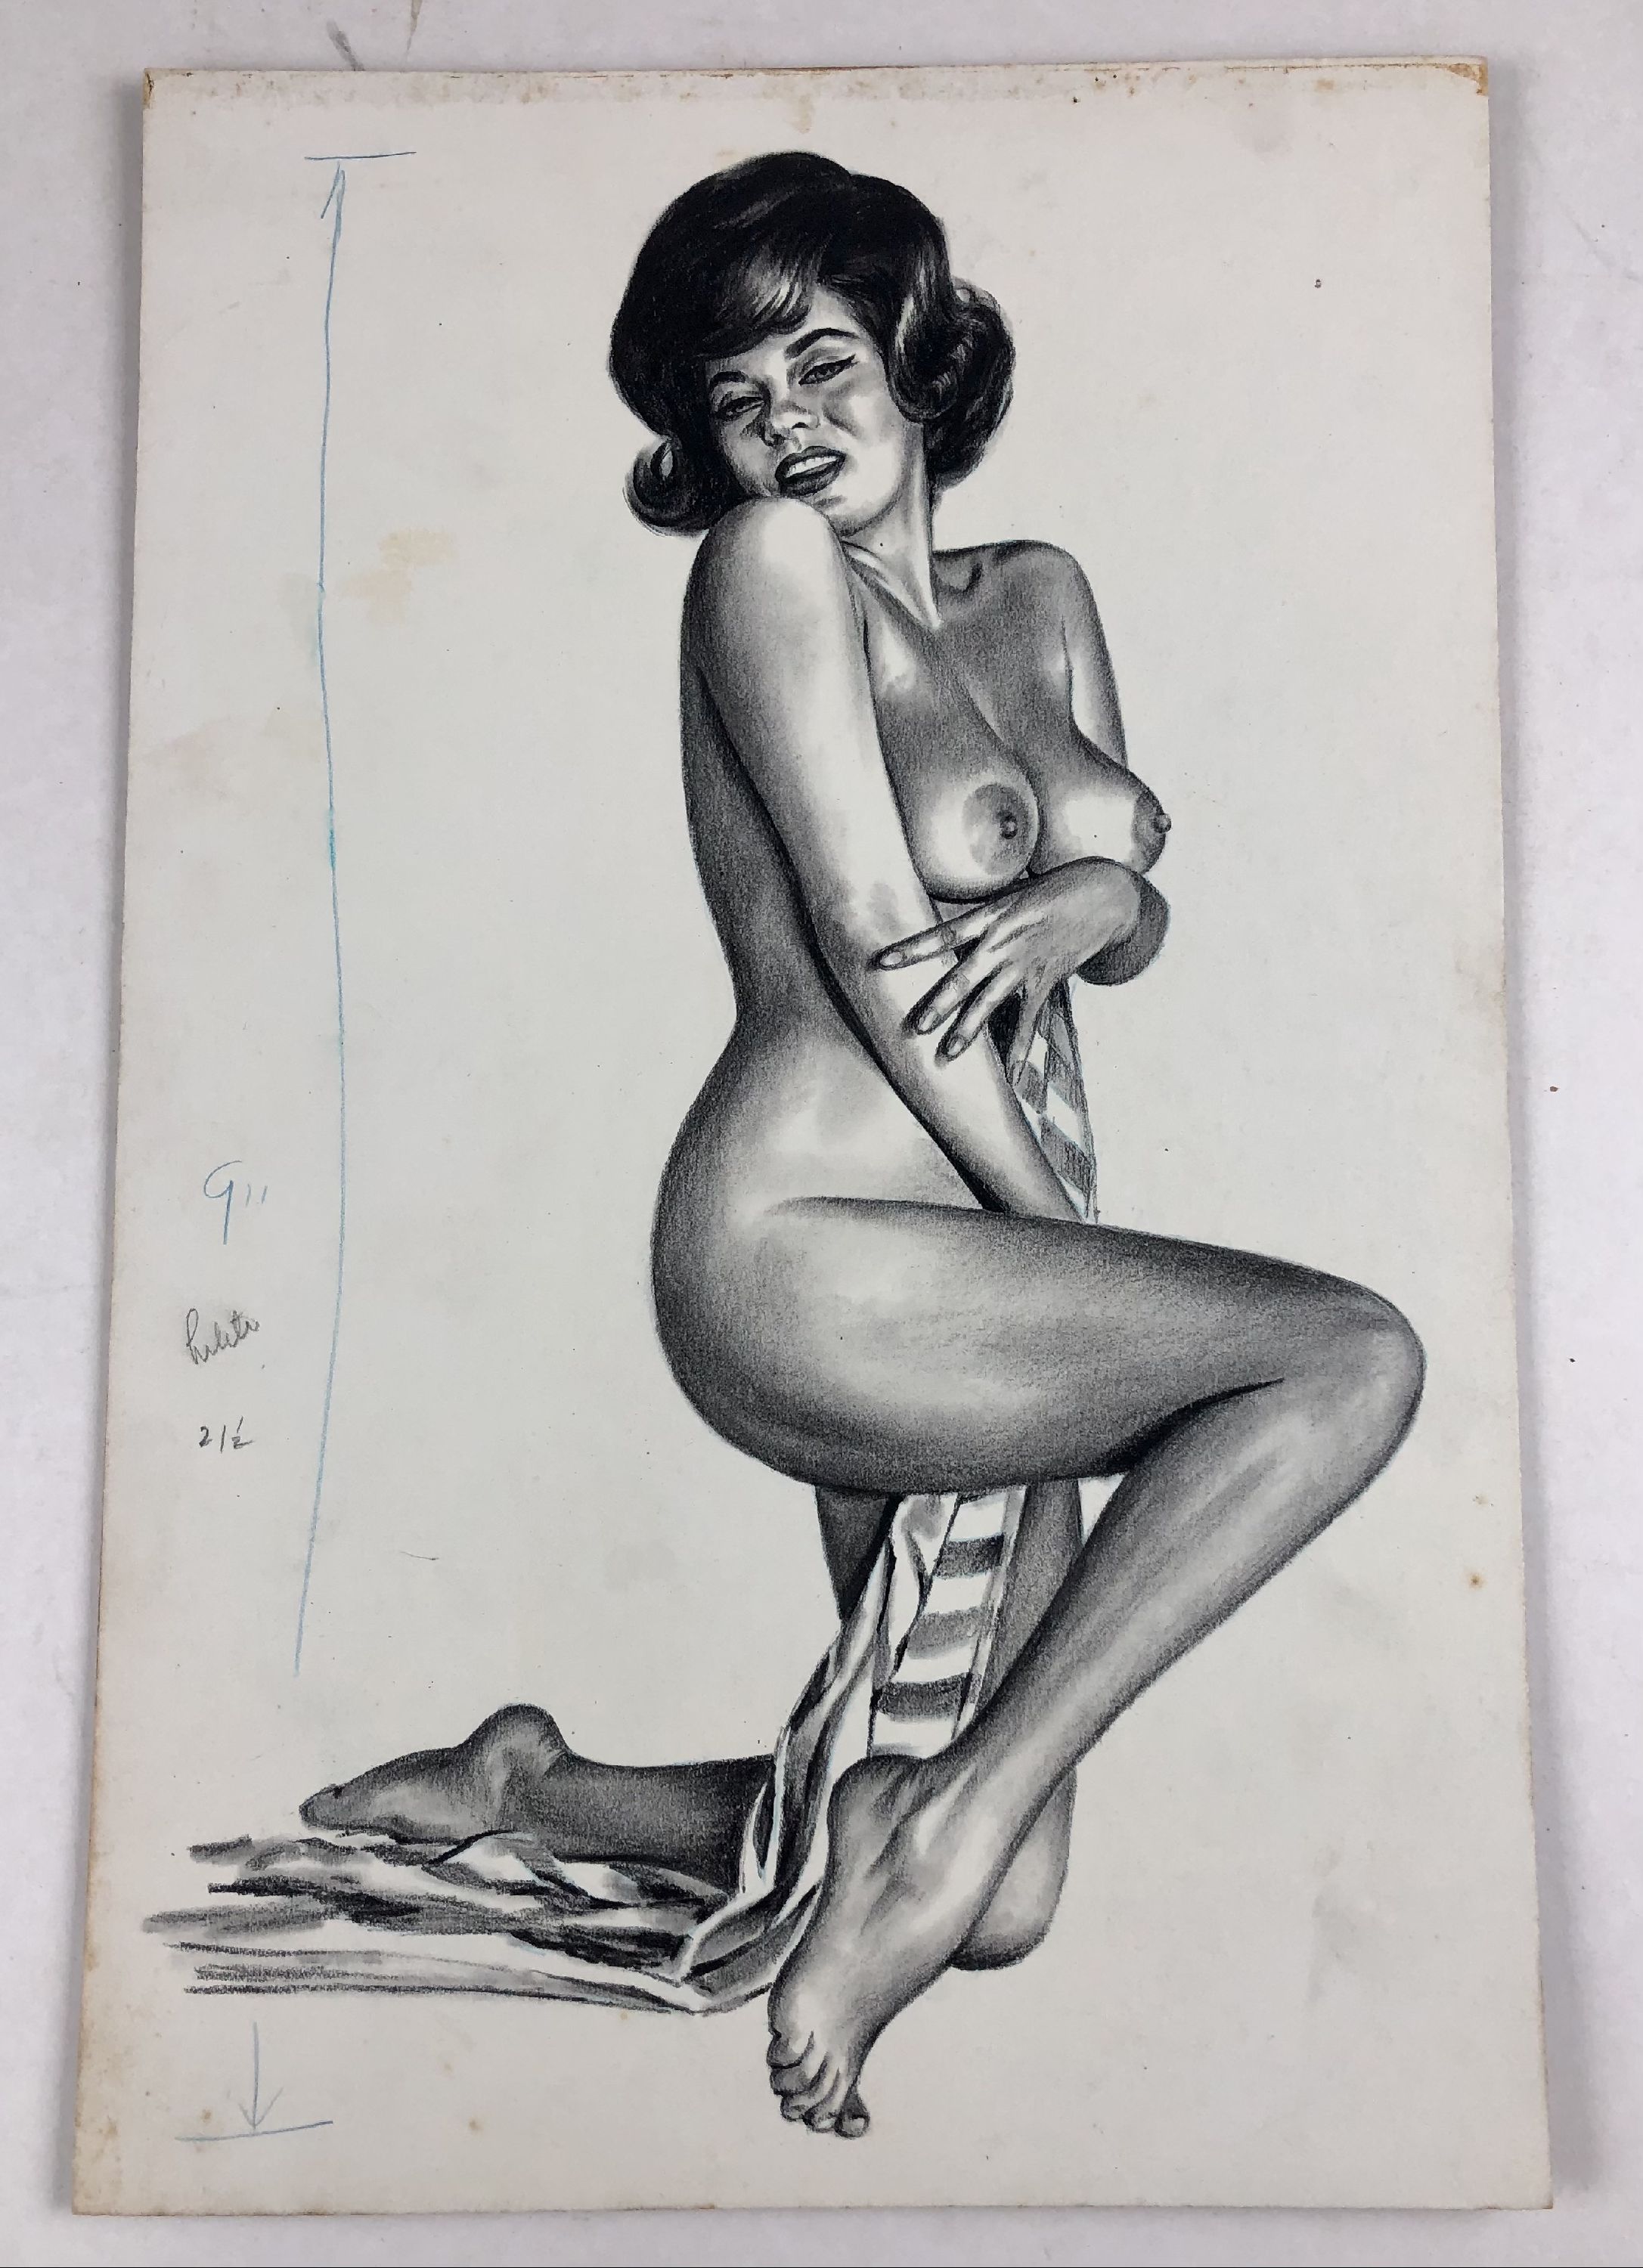 kneeling nude woman displaying breasts and clutching sheet between her legs